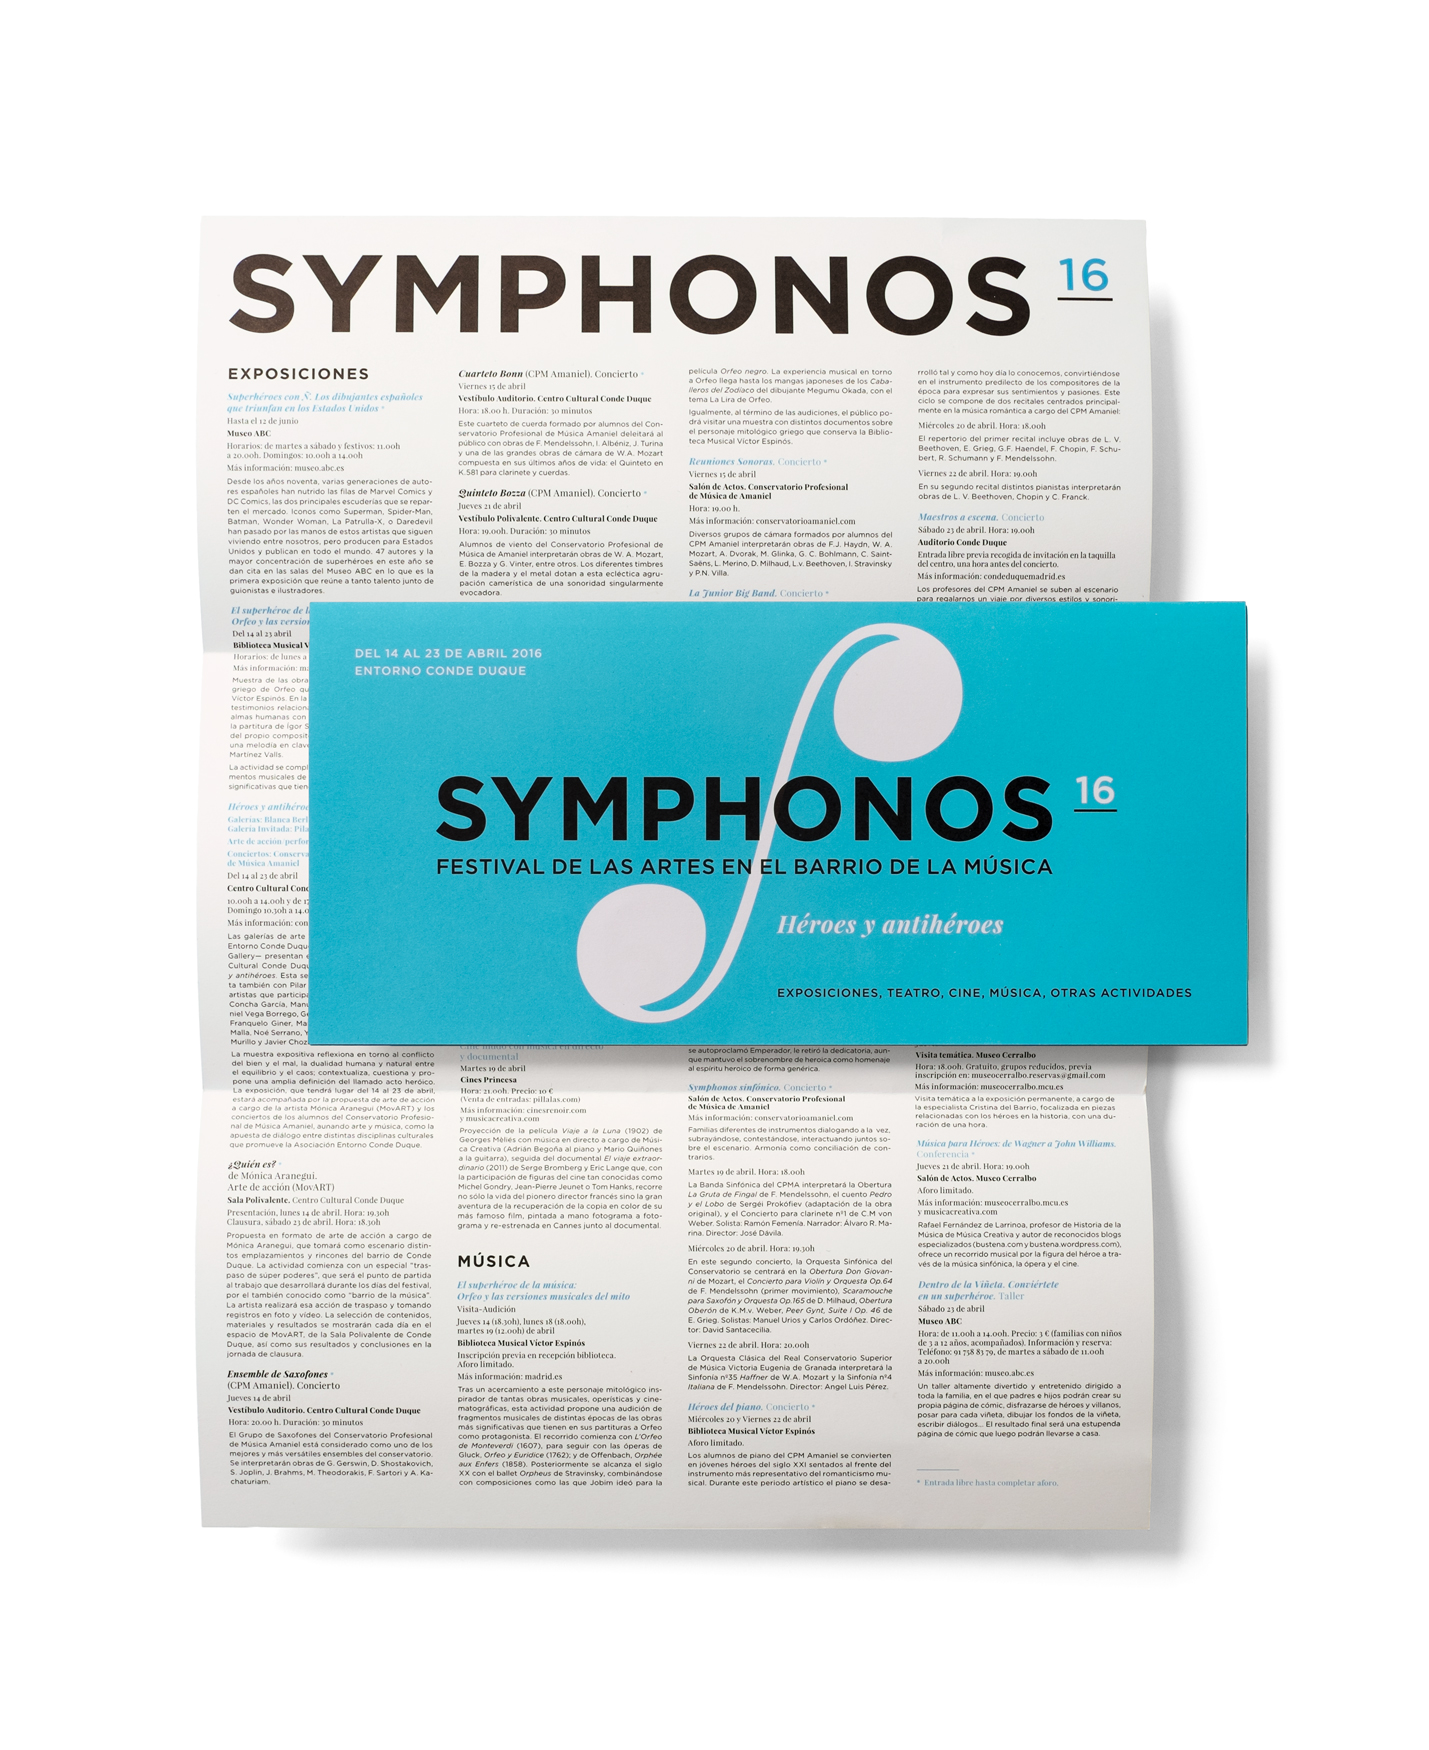 Symphonos by Estudio Pep Carrió - Creative Work - $i